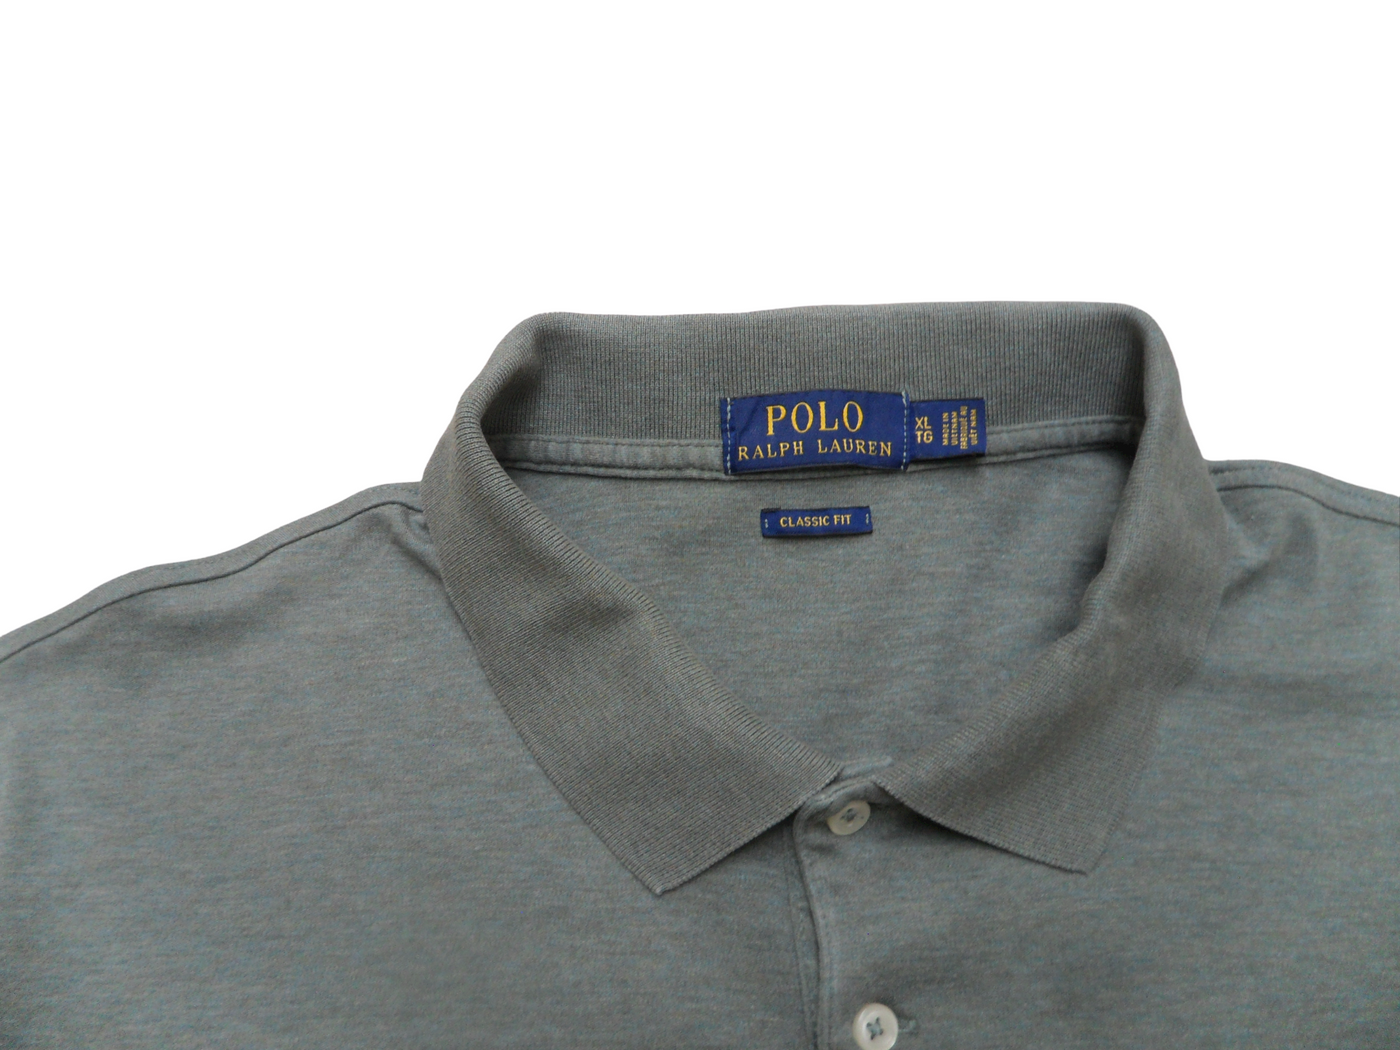 Vintage Polo Ralph Lauren Green Men's Short Sleeve Polo Shirt Size - XL